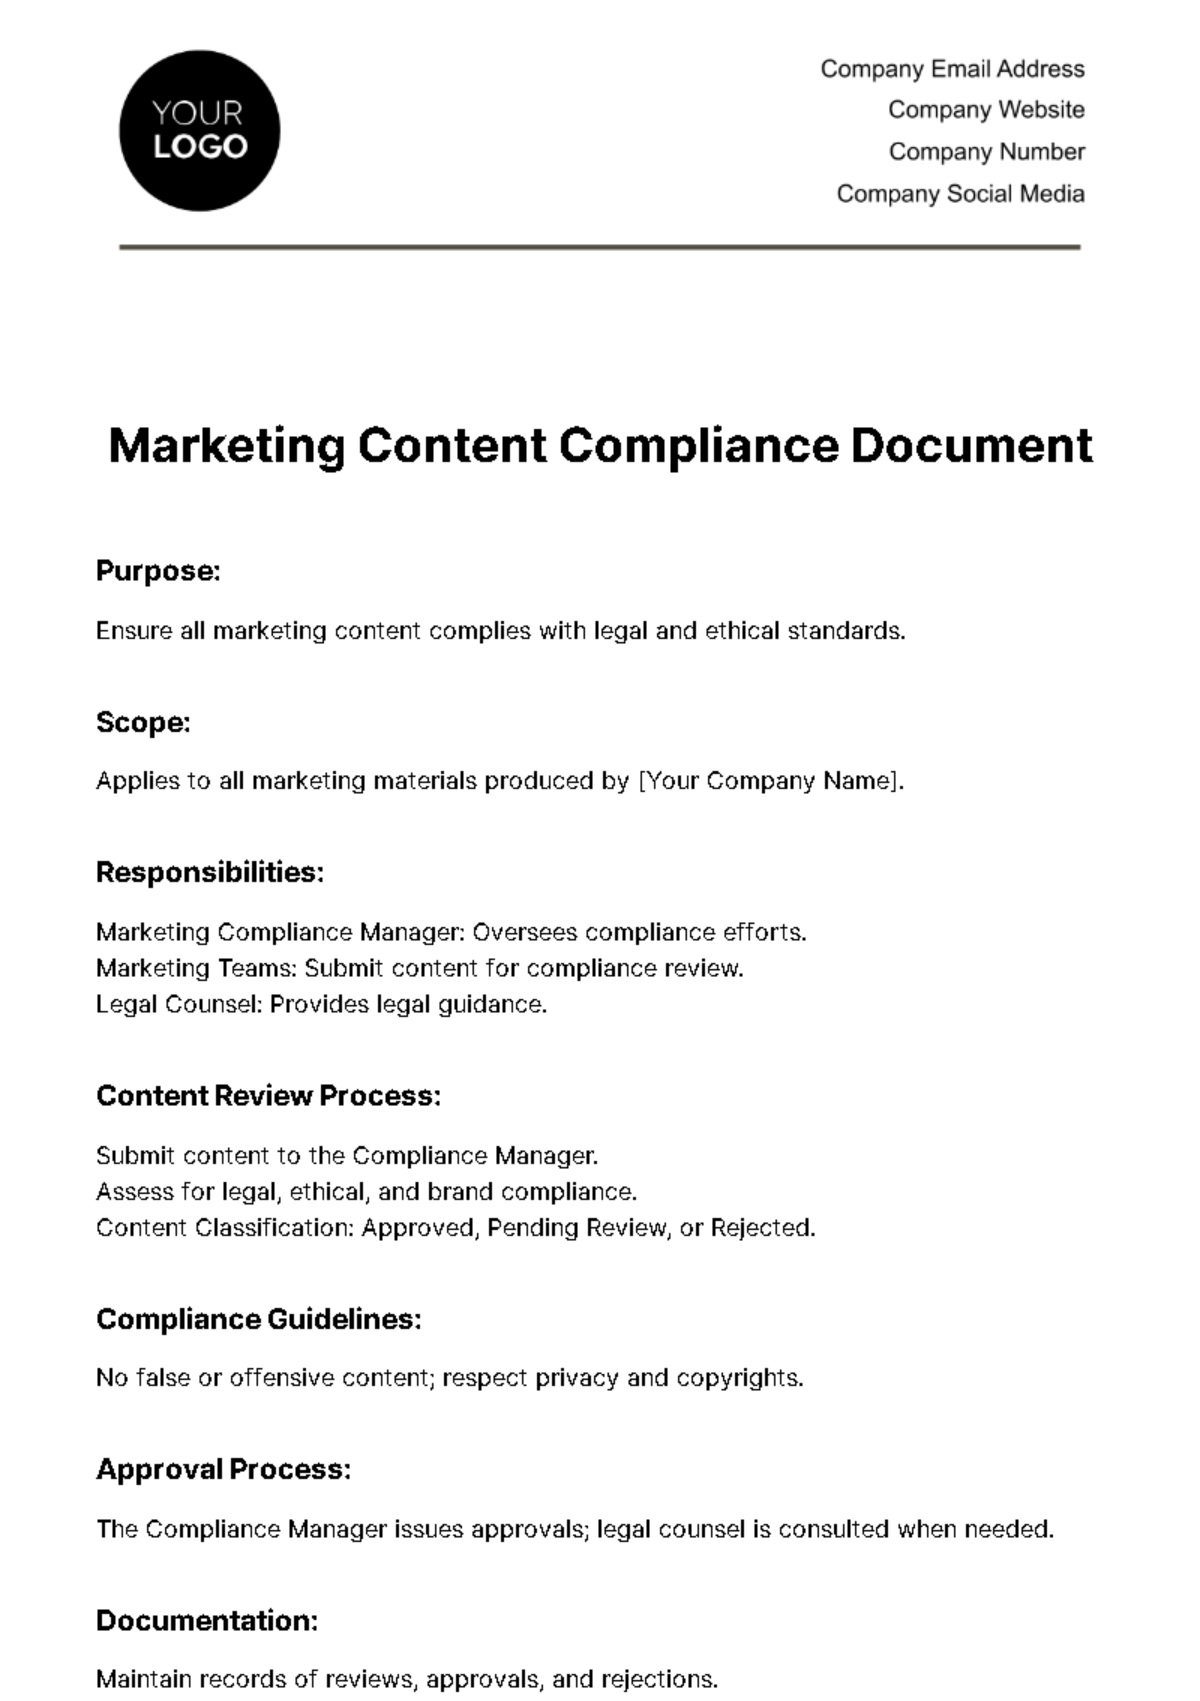 Marketing Content Compliance Document Template